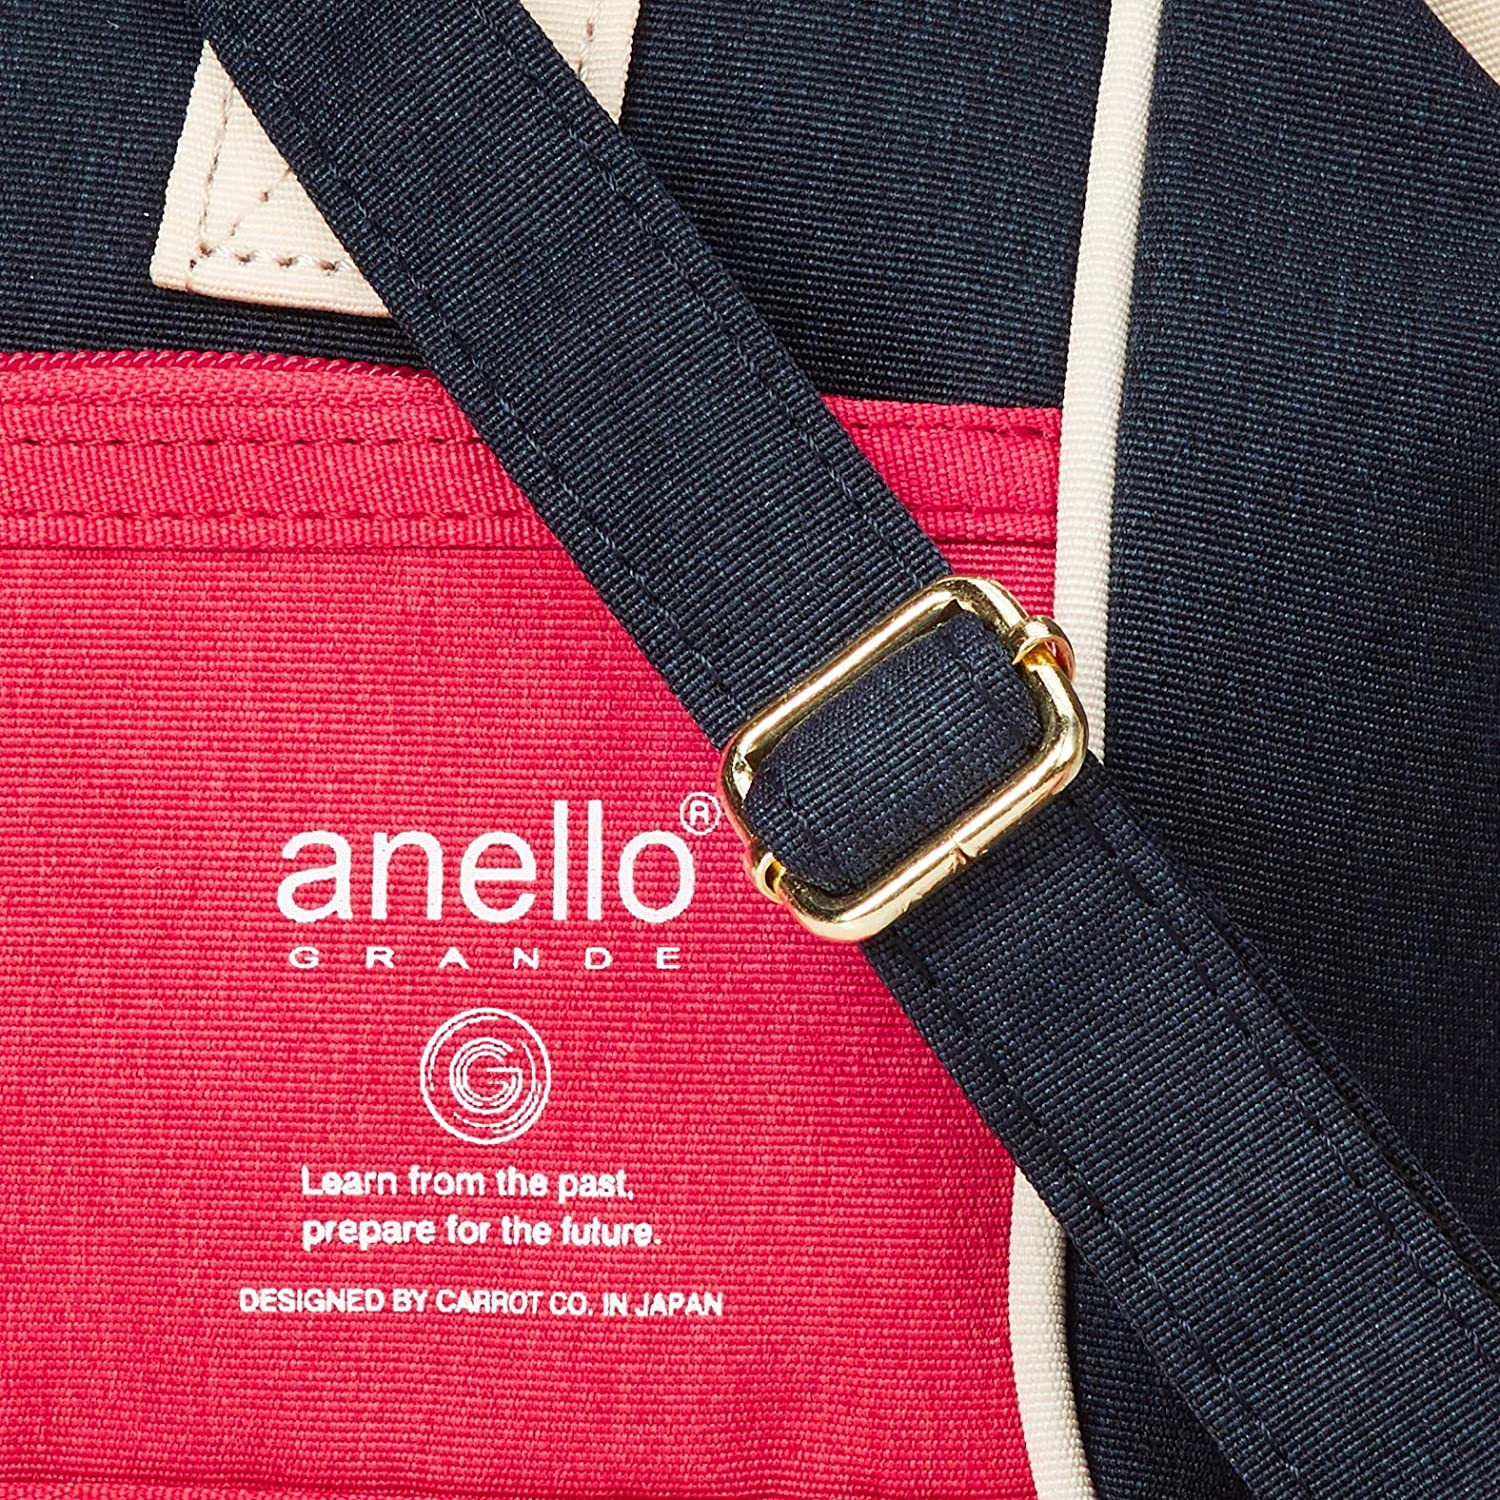 Anello 2way Mini Shoulder Bag - Red